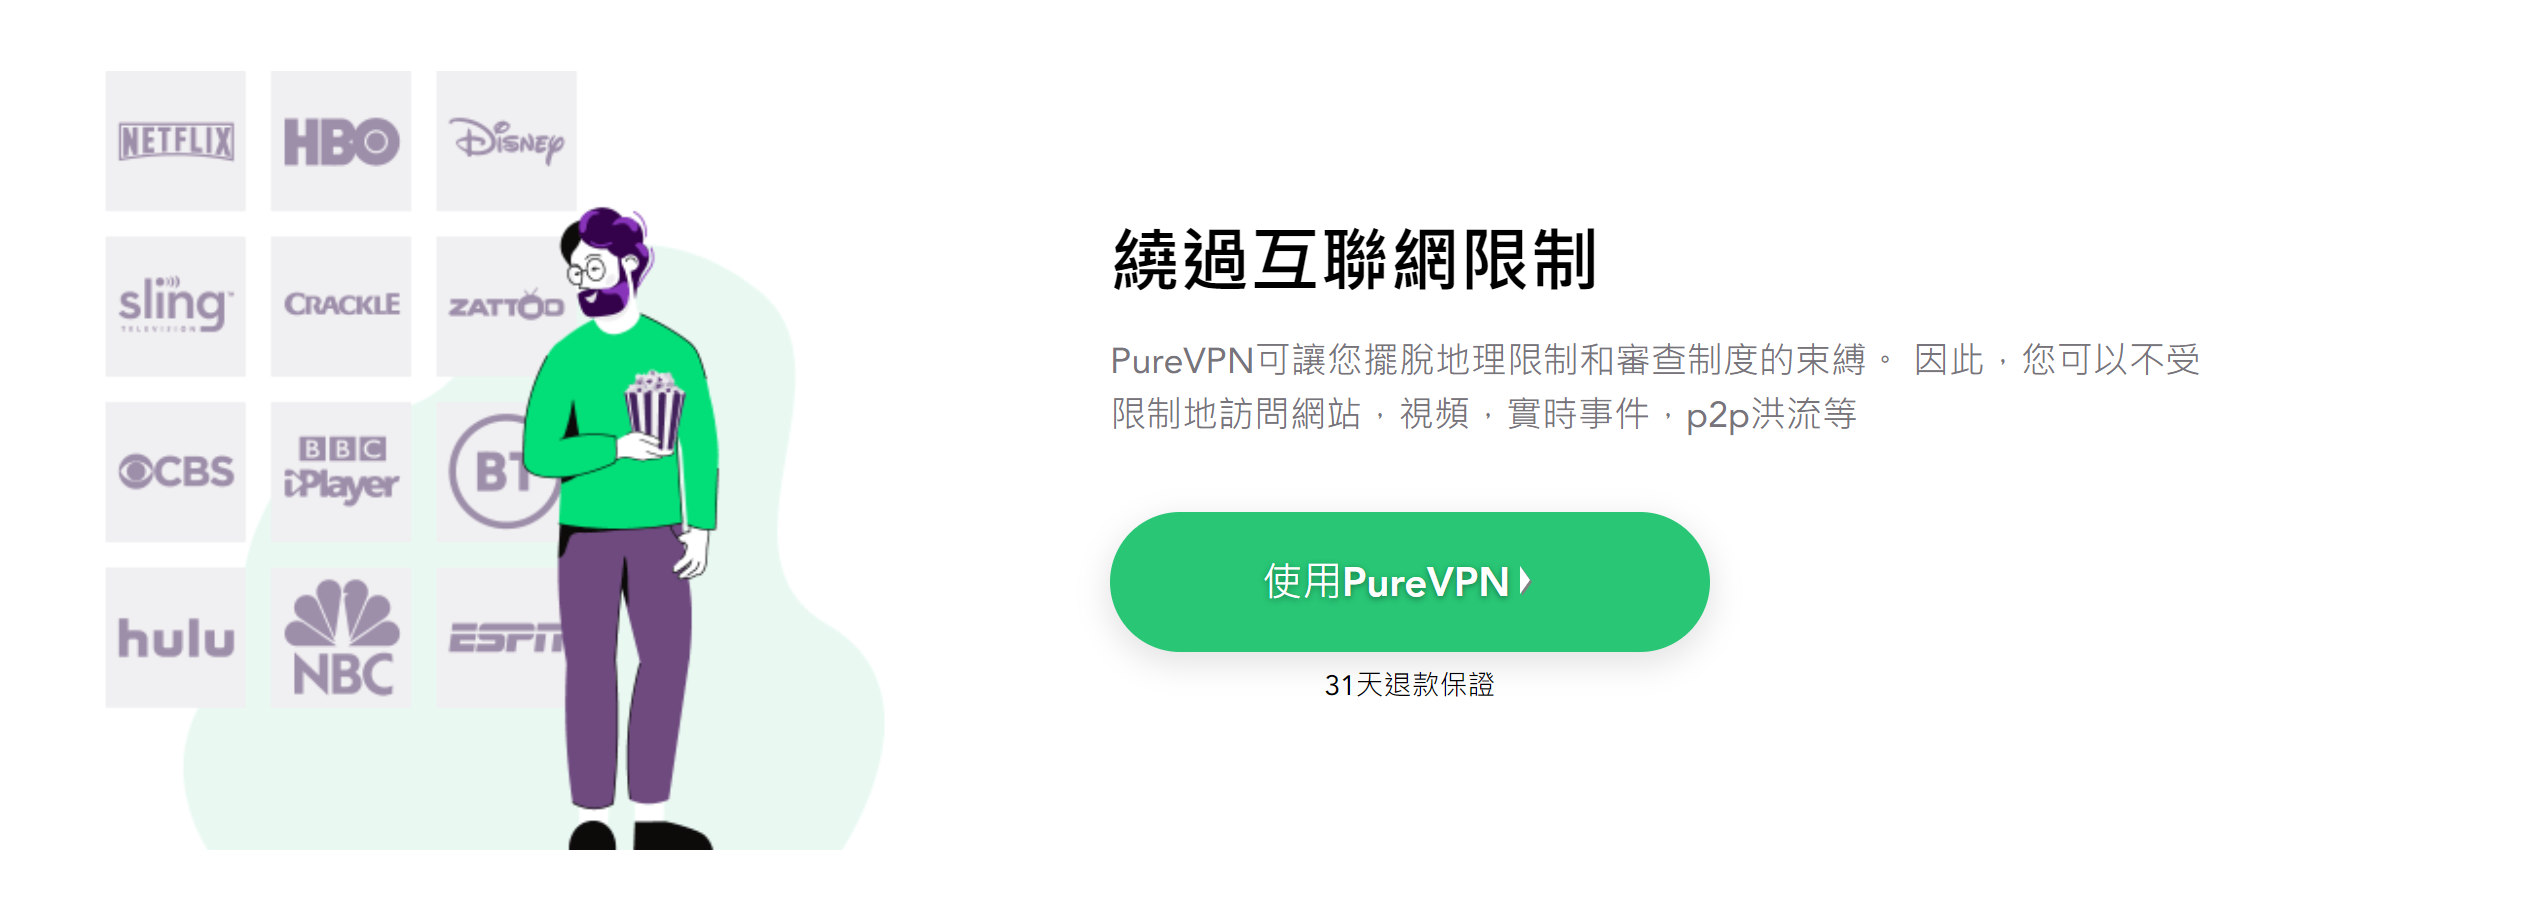 【PureVPN】2021聖誕優惠，看Netflix，Disney+追劇必備，享受超音速20G伺服器服務。 - 追劇, 台灣, NETFLIX, 優惠碼, 優惠, PureVPN, VPN, purevpn下載, PureVPN download, purevpn台灣, purevpn評價, purevpn教學, purevpn退款, 折扣碼, 雙十, 國慶, VPN優惠, PureVPN 評價, purevpn中資, purevpn中國, vpn免安裝, vpn下載, vpn是什麼, vpn日本, vpn中國, vpn電腦, vpn台灣, vpn怎麼用, PureVPN 評測心得, PureVPN評價如何, PureVPN優惠碼, 折購碼, PureVPN折扣, PureVPN優惠, PureVPN折扣碼, PureVPN台灣折扣碼 - 敗家達人推薦